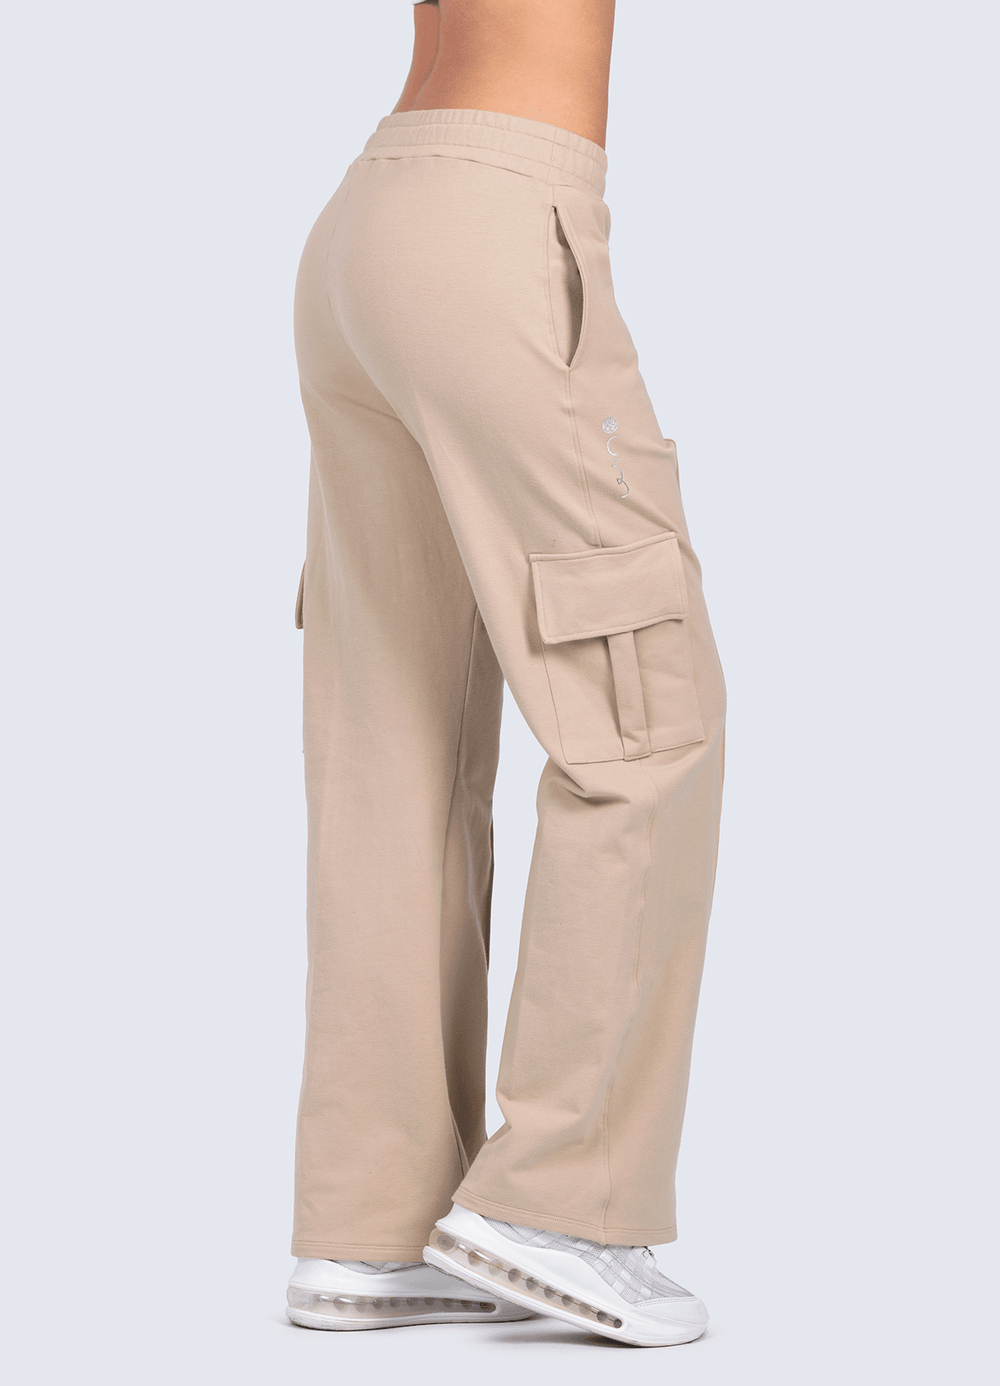 Pant Comfy Time - Beige 1 SWEATPANT WinFitnesswear 